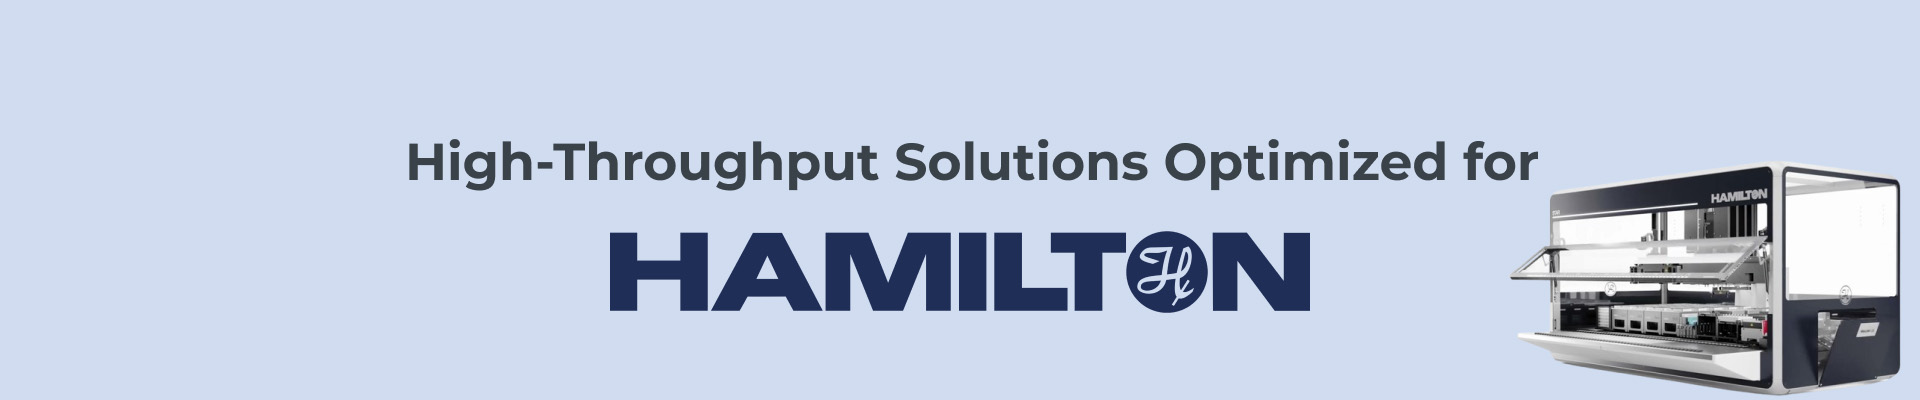 Banner for Hamilton Automation